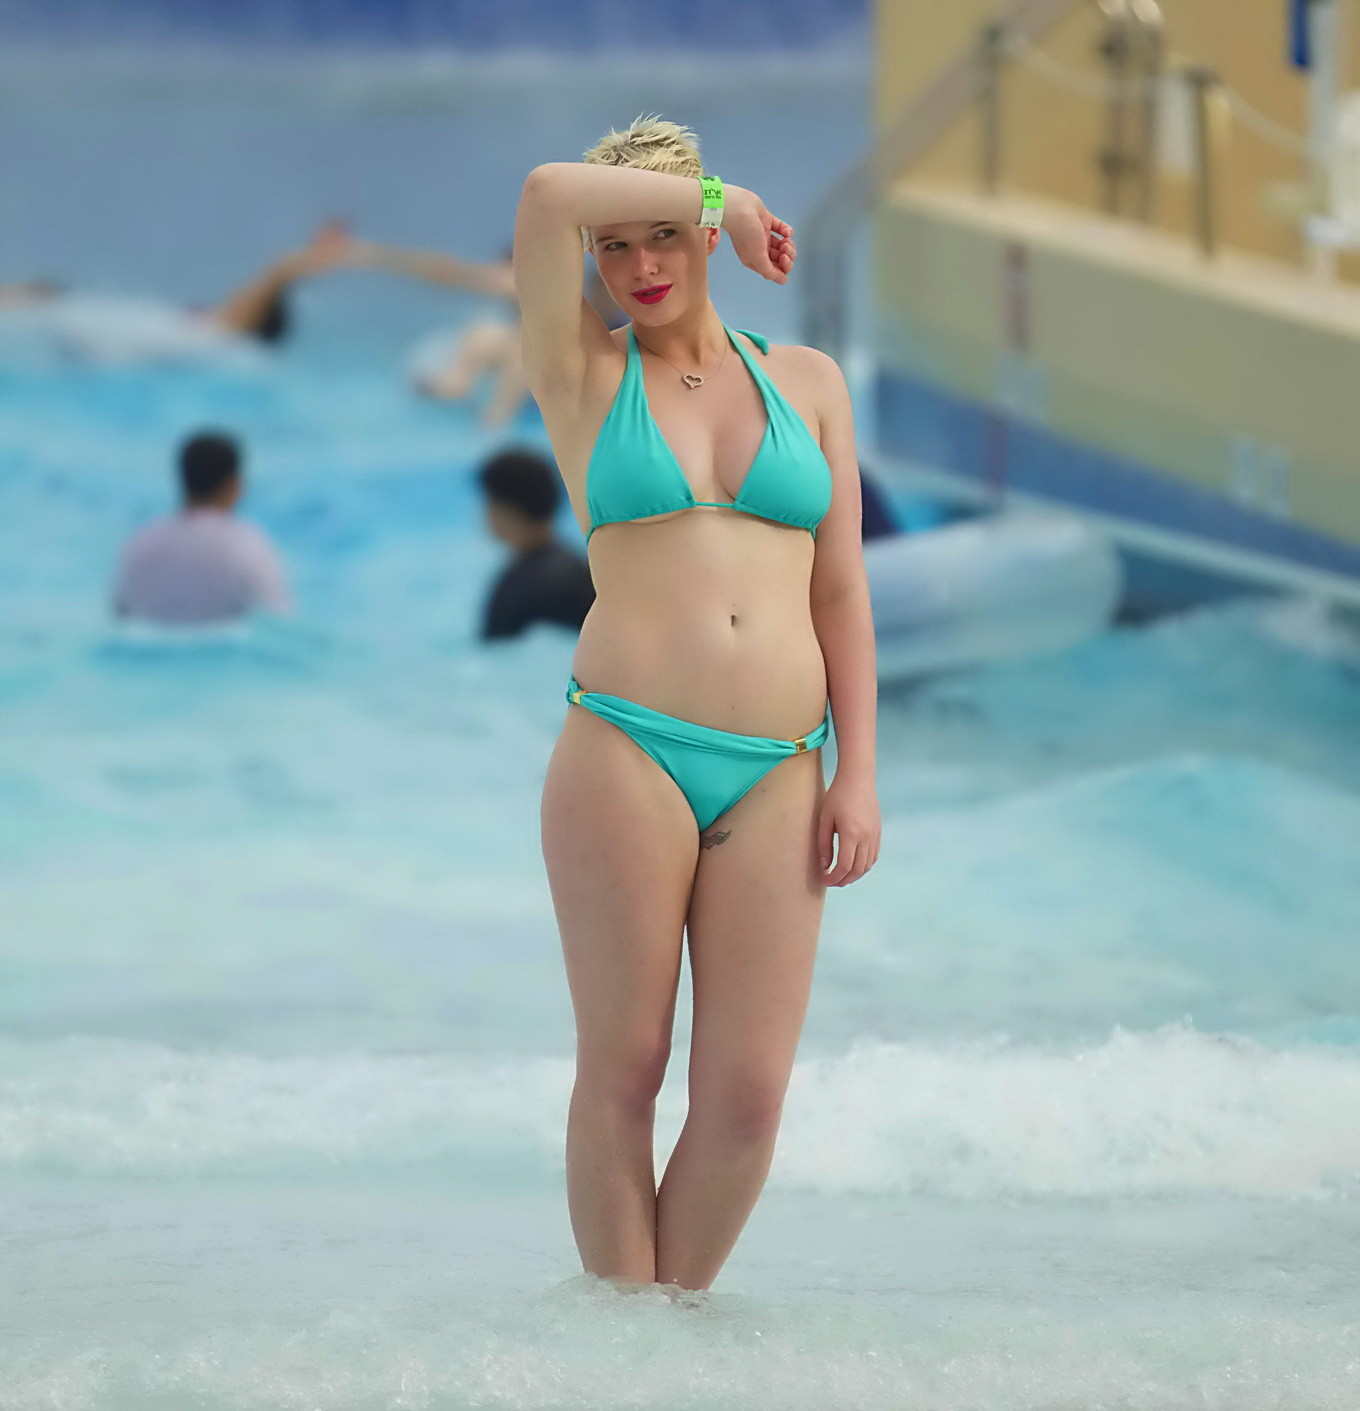 Helen flanagan con un diminuto bikini azul claro en una playa de dubai
 #75236381